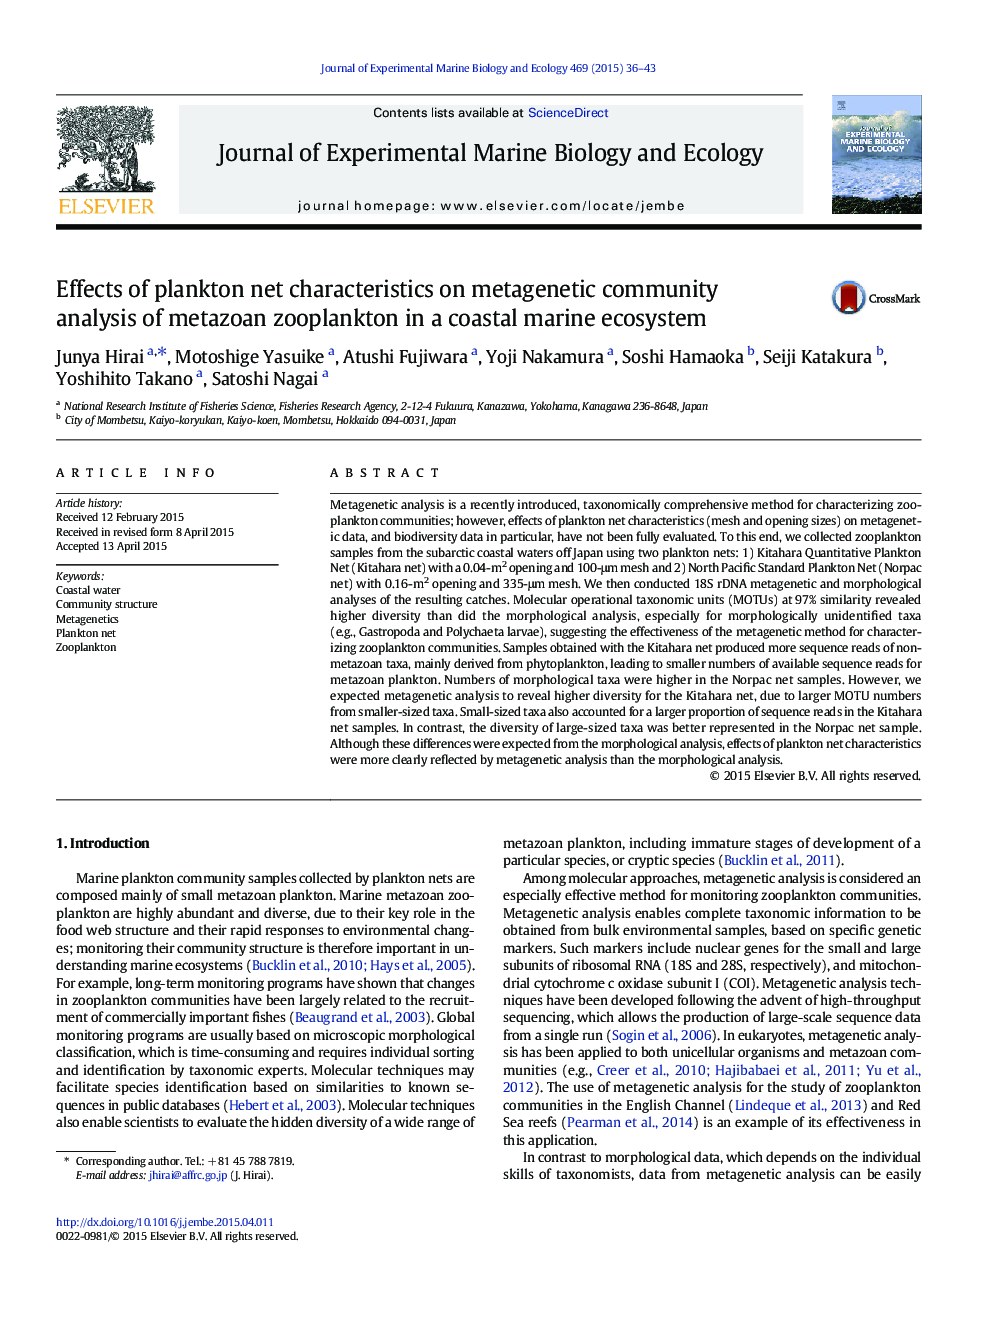 Effects of plankton net characteristics on metagenetic community analysis of metazoan zooplankton in a coastal marine ecosystem